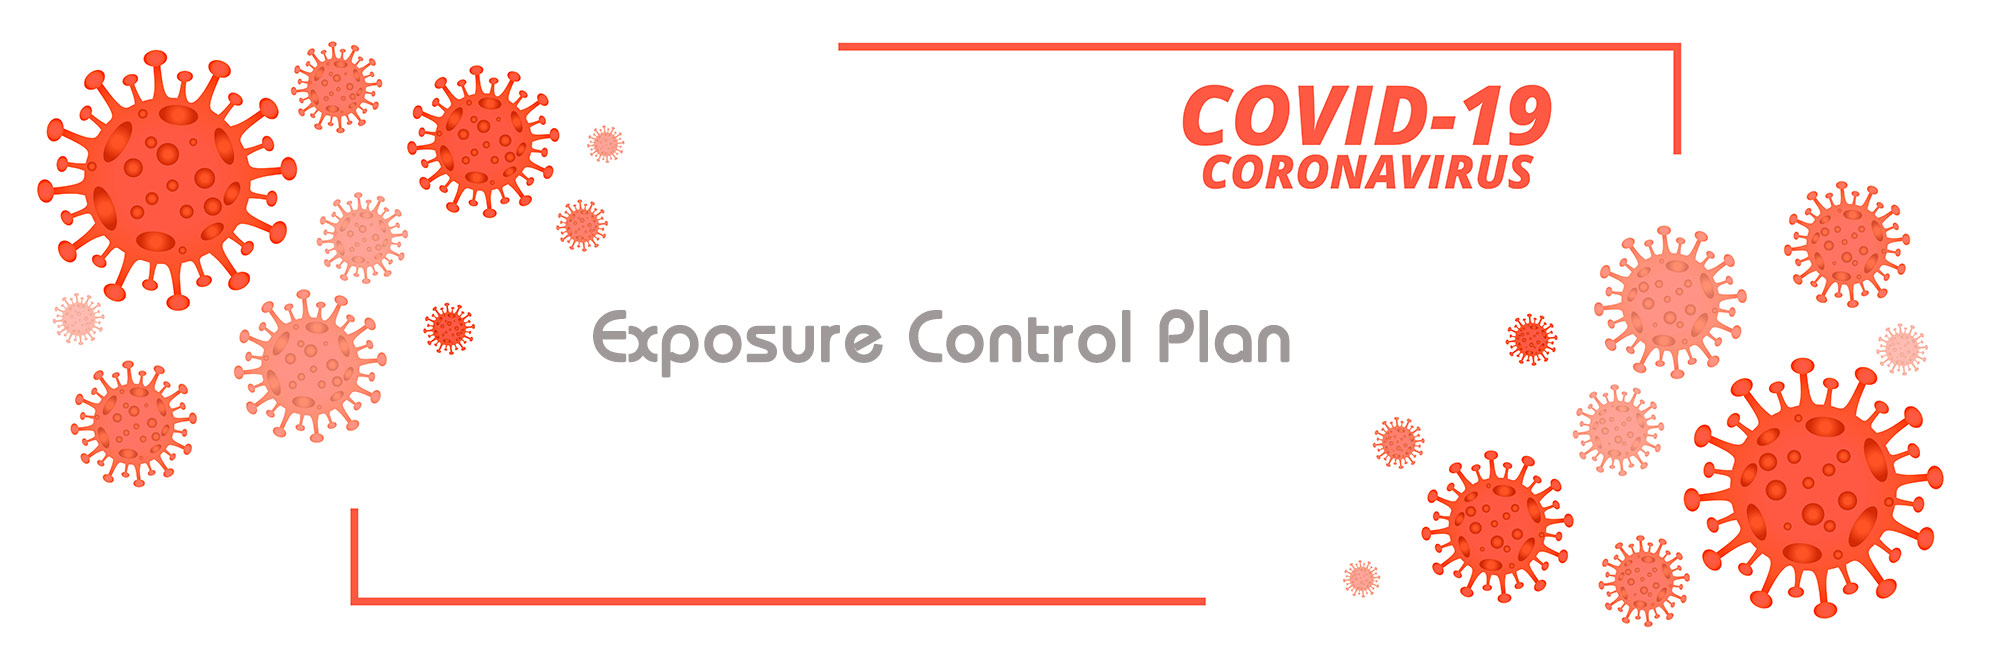 Covid-19 Exposure Control Plan